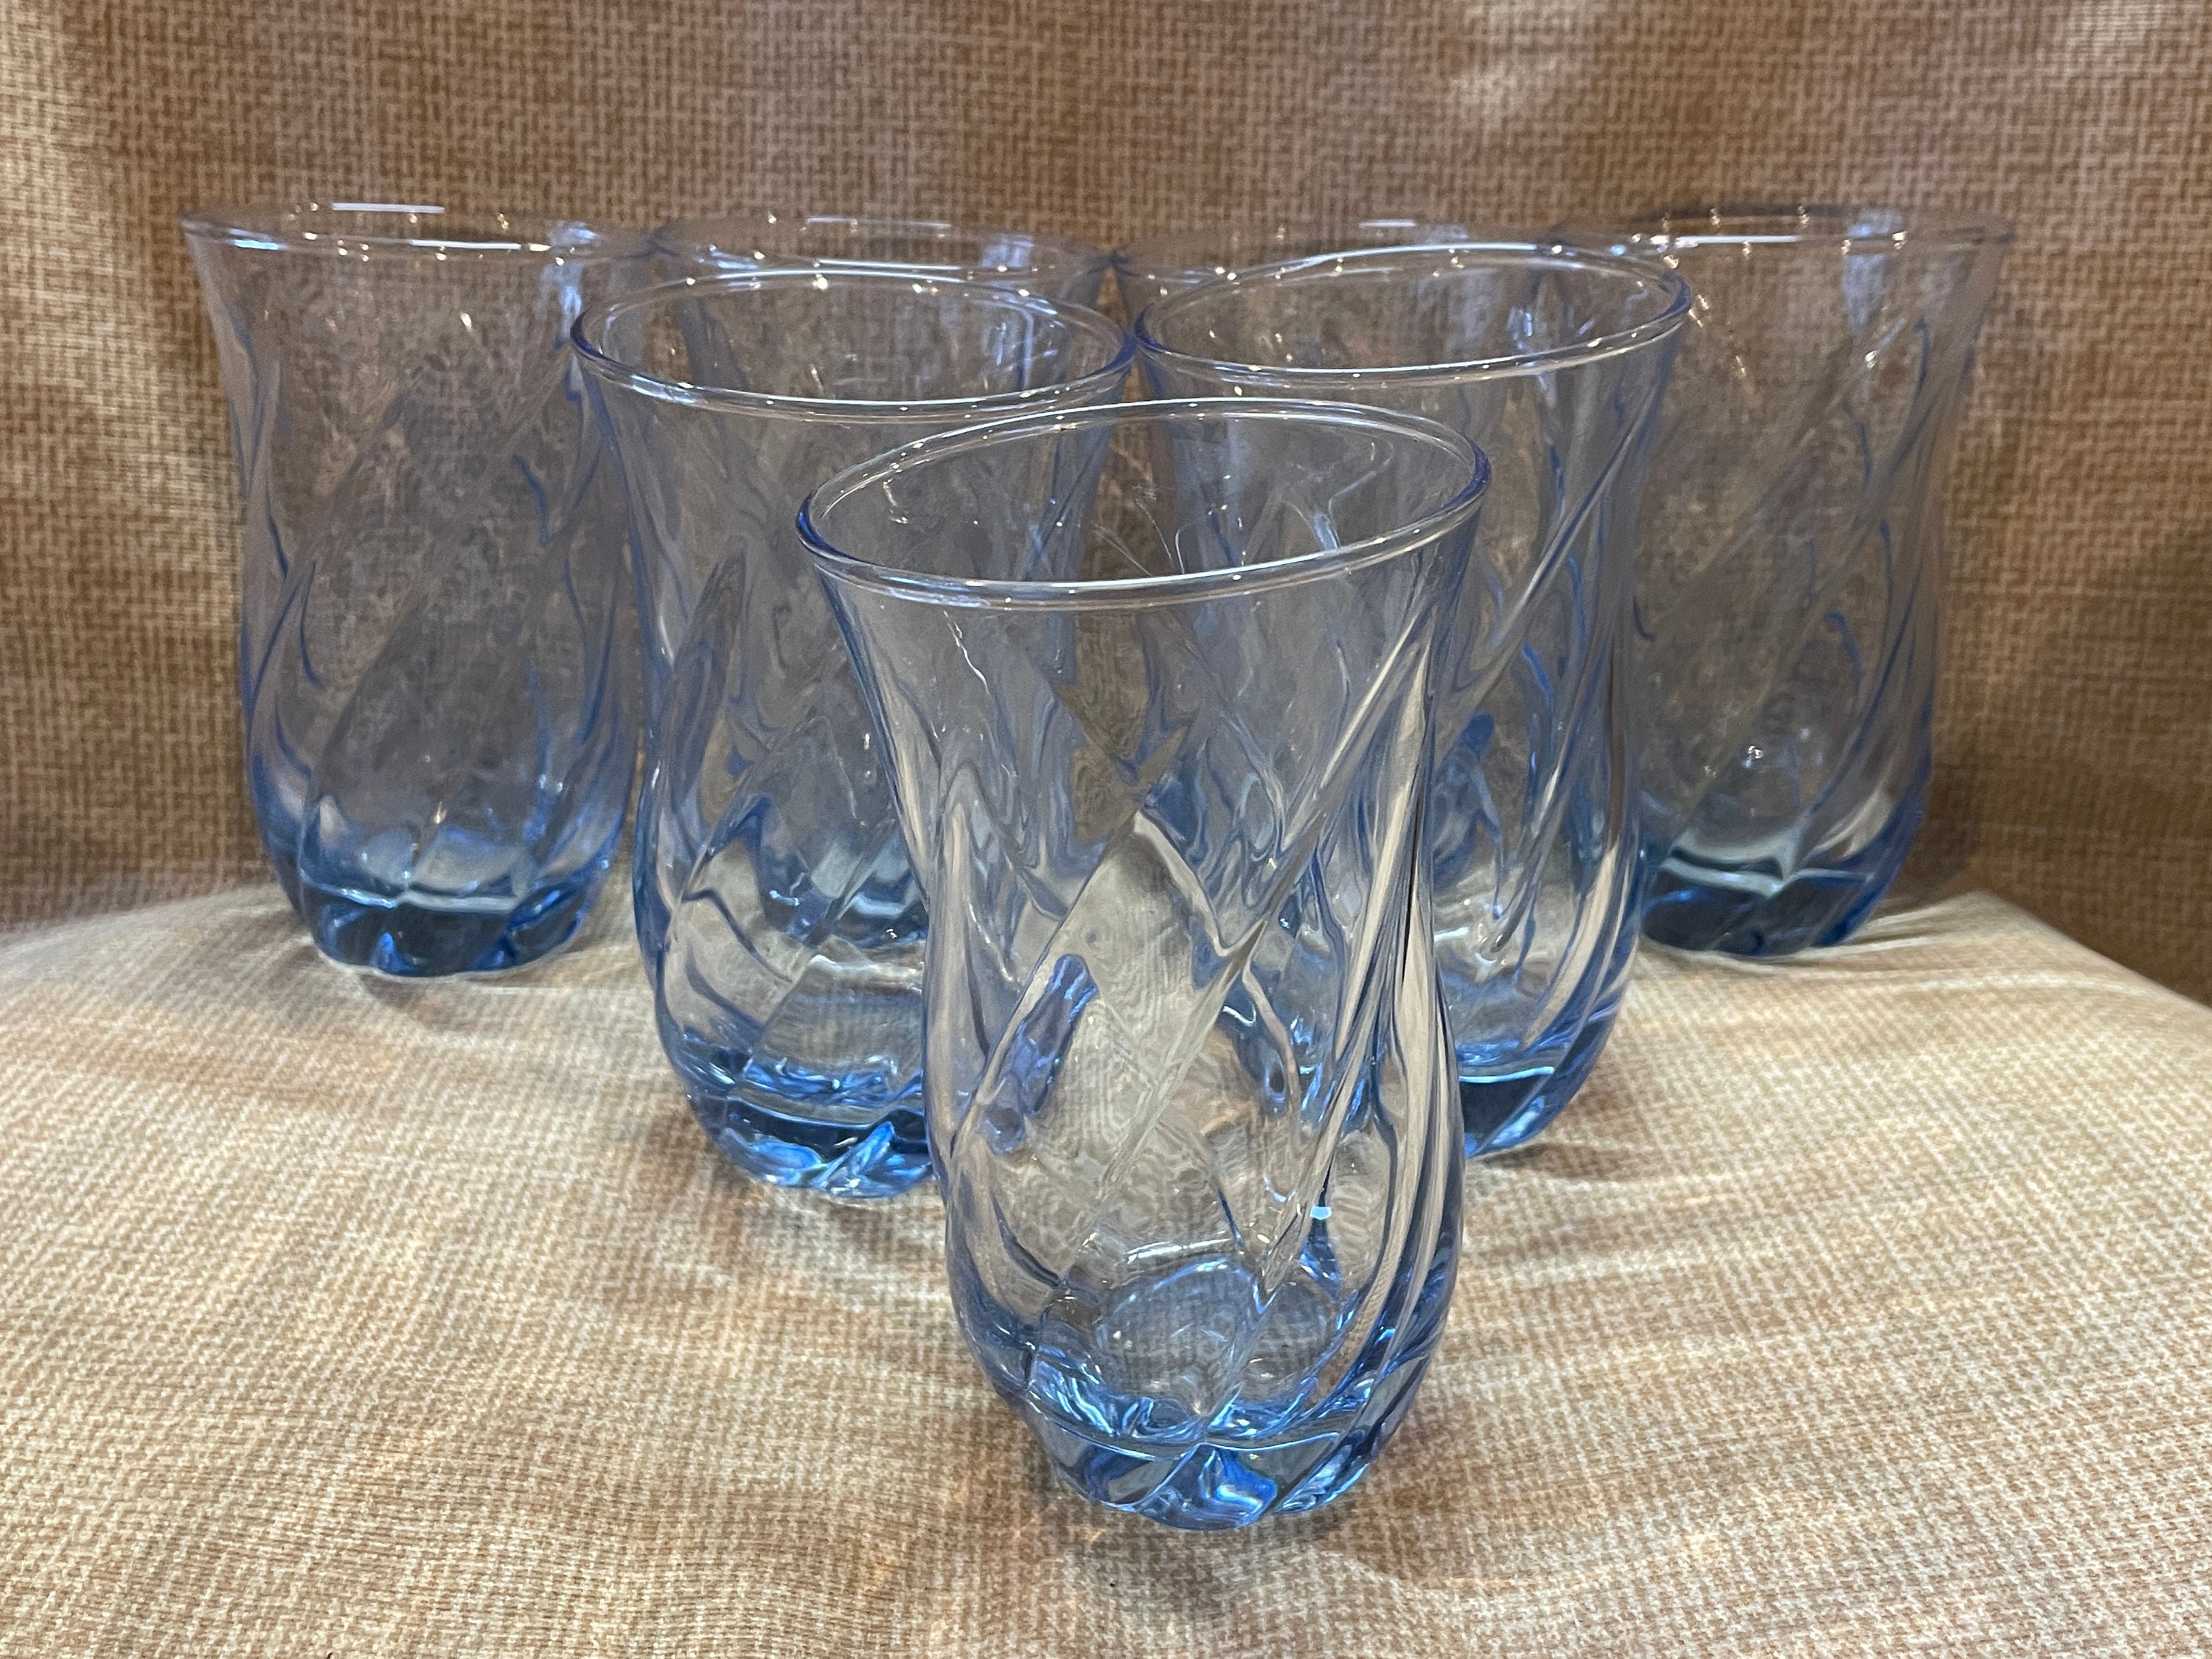 POLIDREAM Hobnail Drinking Glasses Set of 4, Art Deco Vintage Glassware, 12  oz Tall Crystal Tumblers…See more POLIDREAM Hobnail Drinking Glasses Set